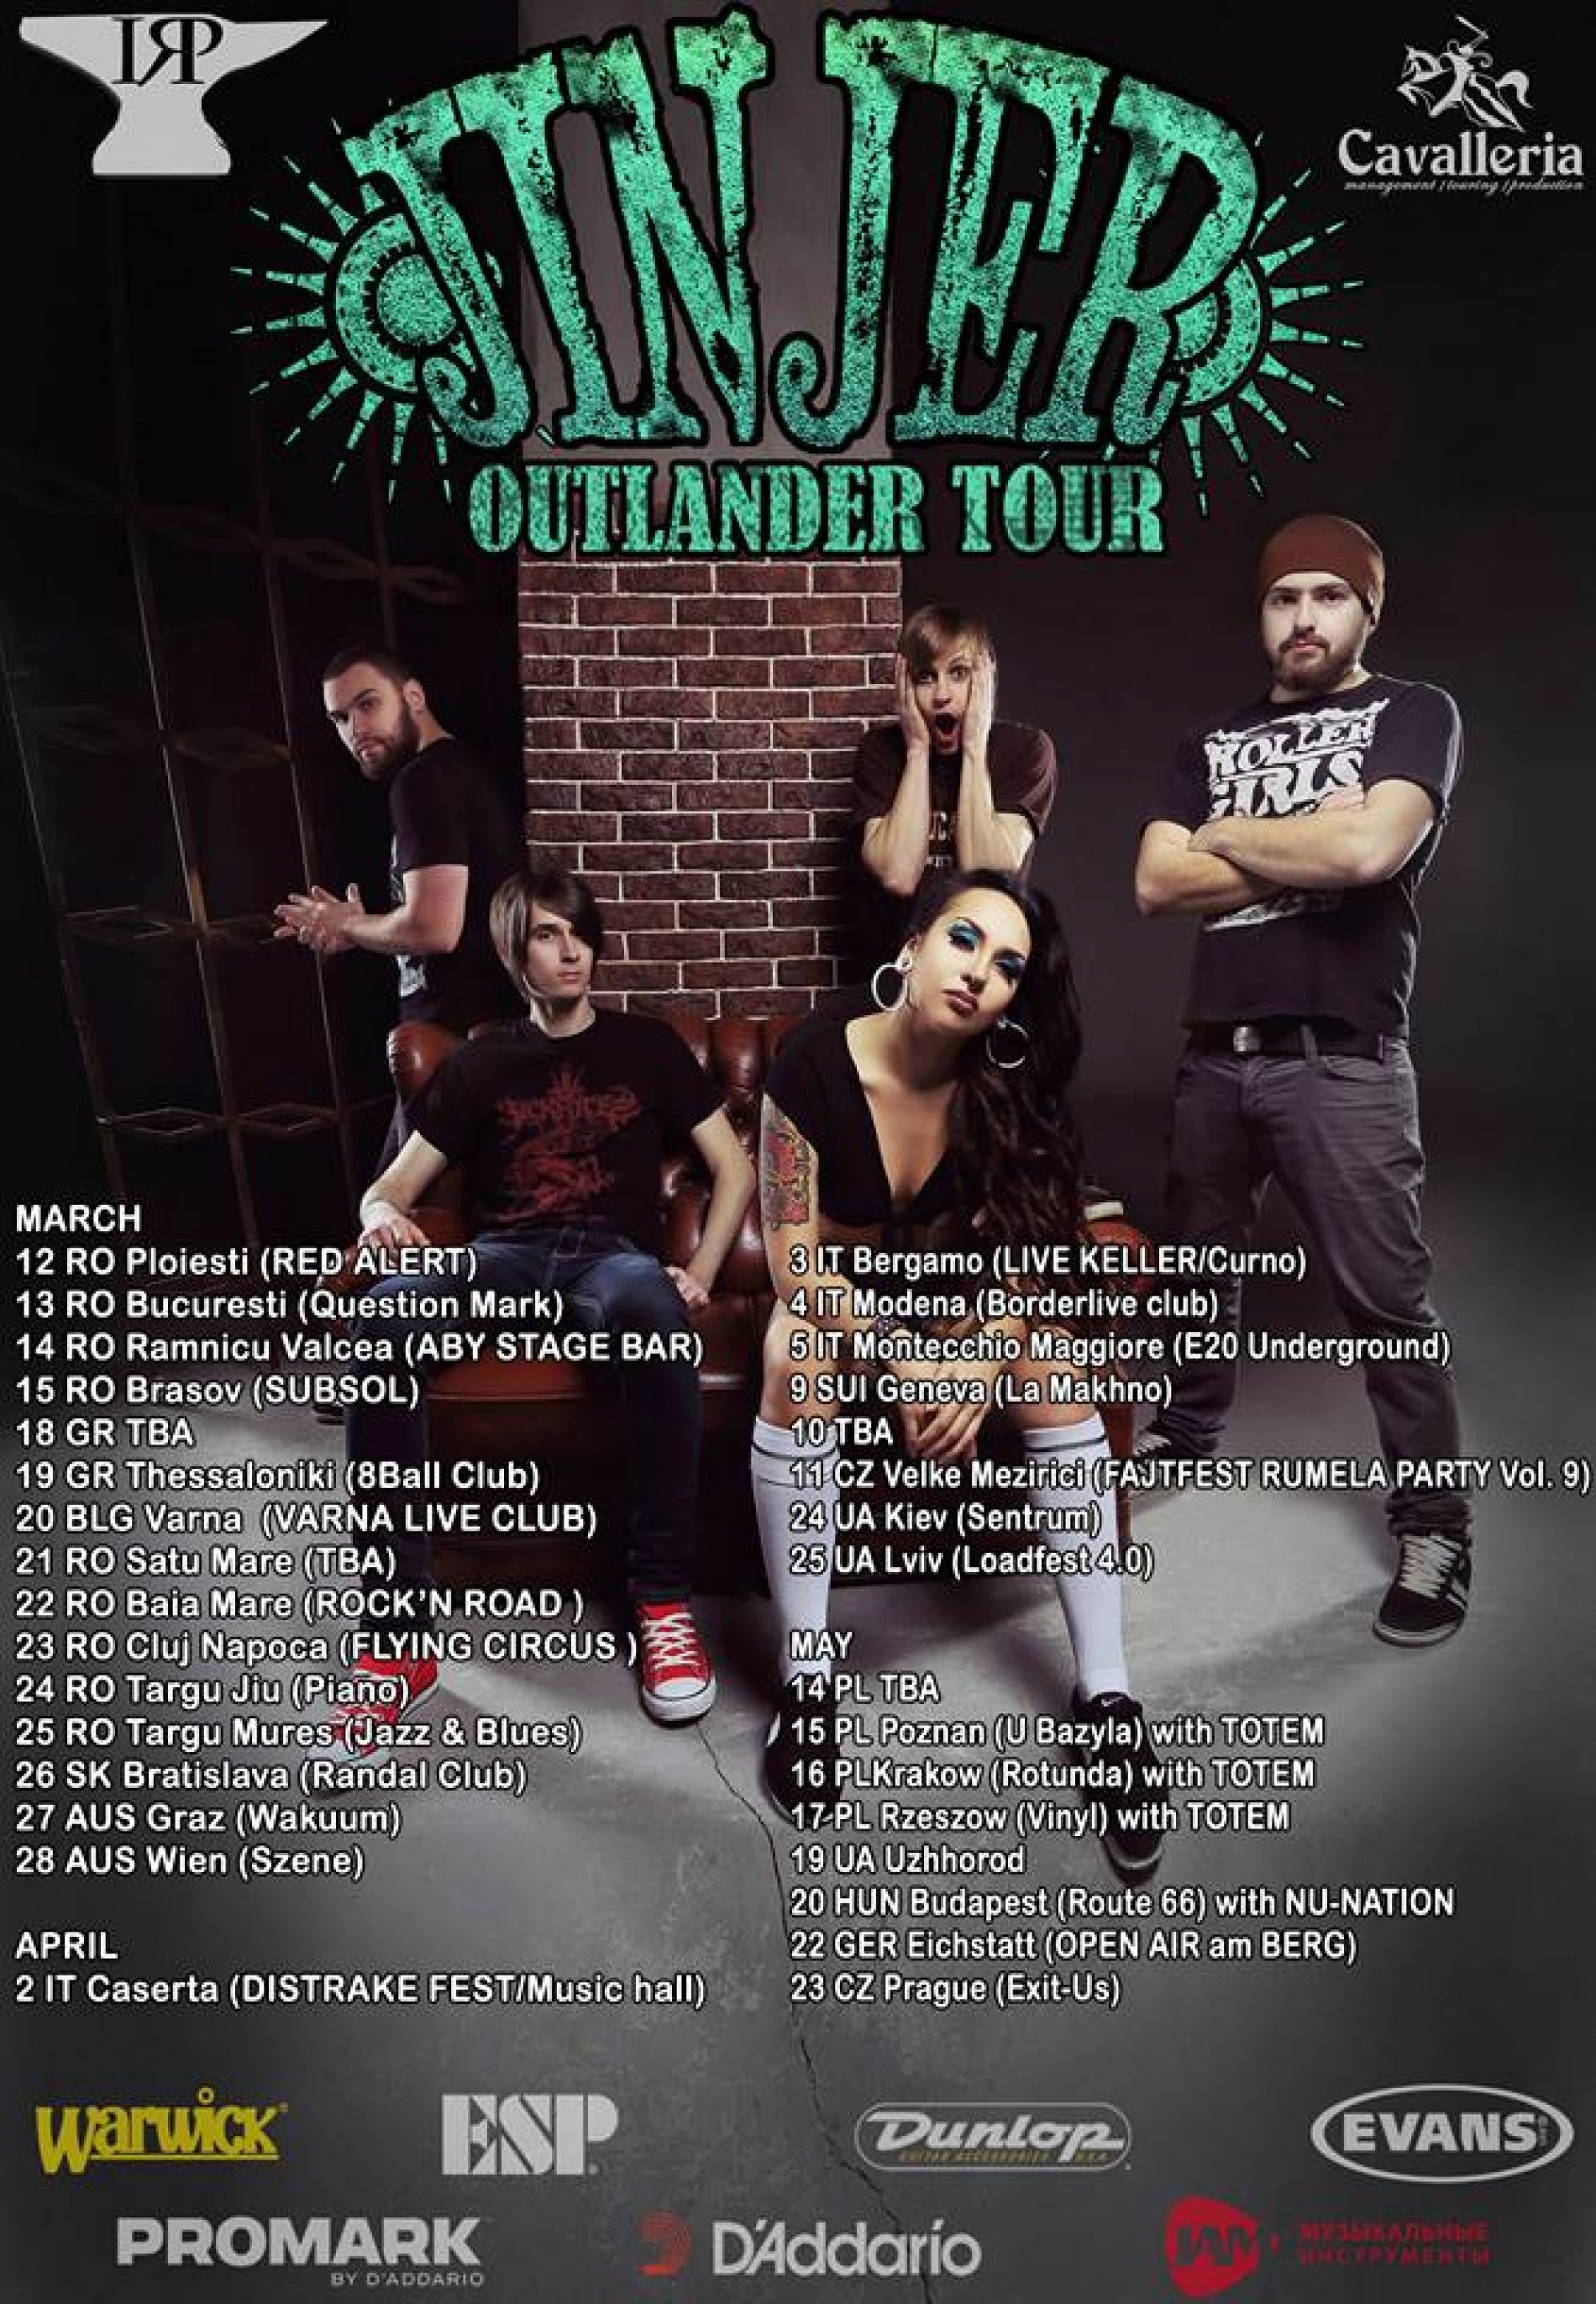 Jinjer Outlander Tour 2015 cu 9 concerte in Romania